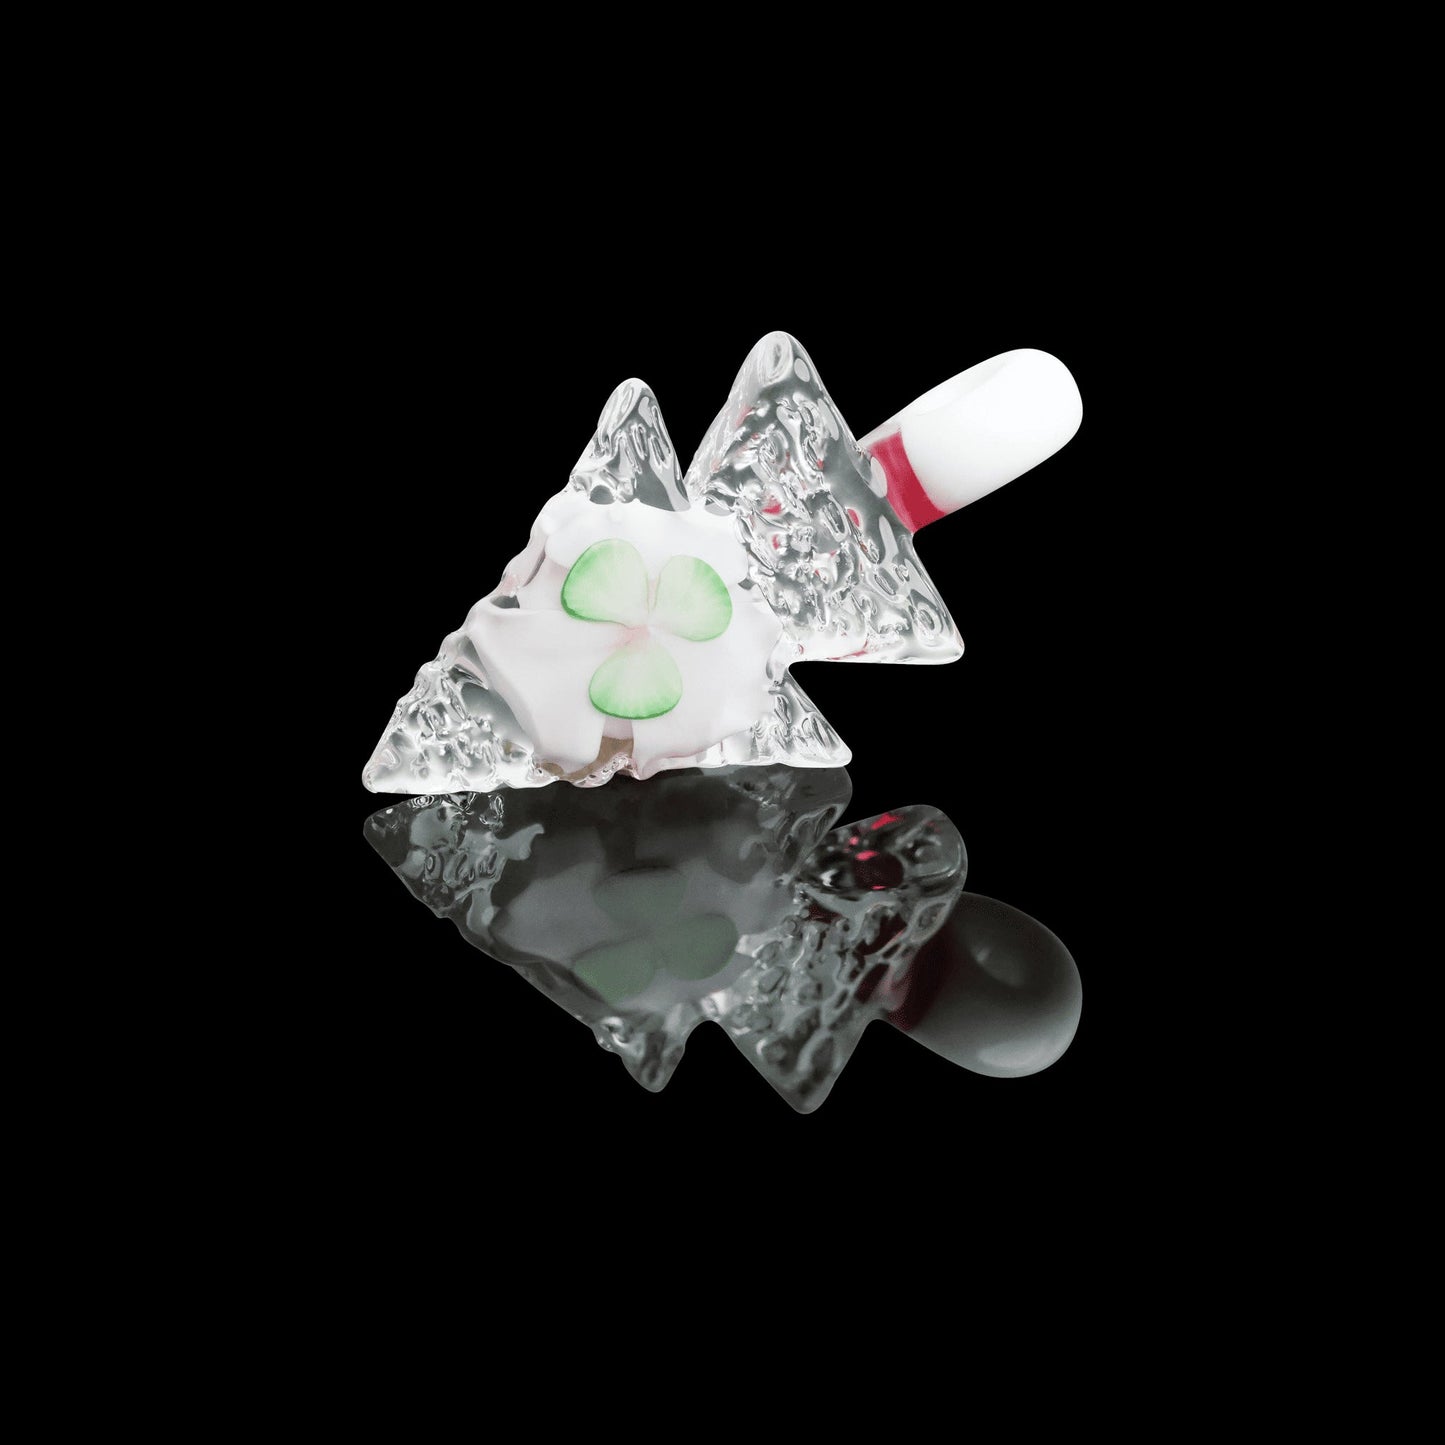 heady glass pendant - Arrowhead Collab Pendant by Jared DeLong x Elks That Run (2022 Drop)